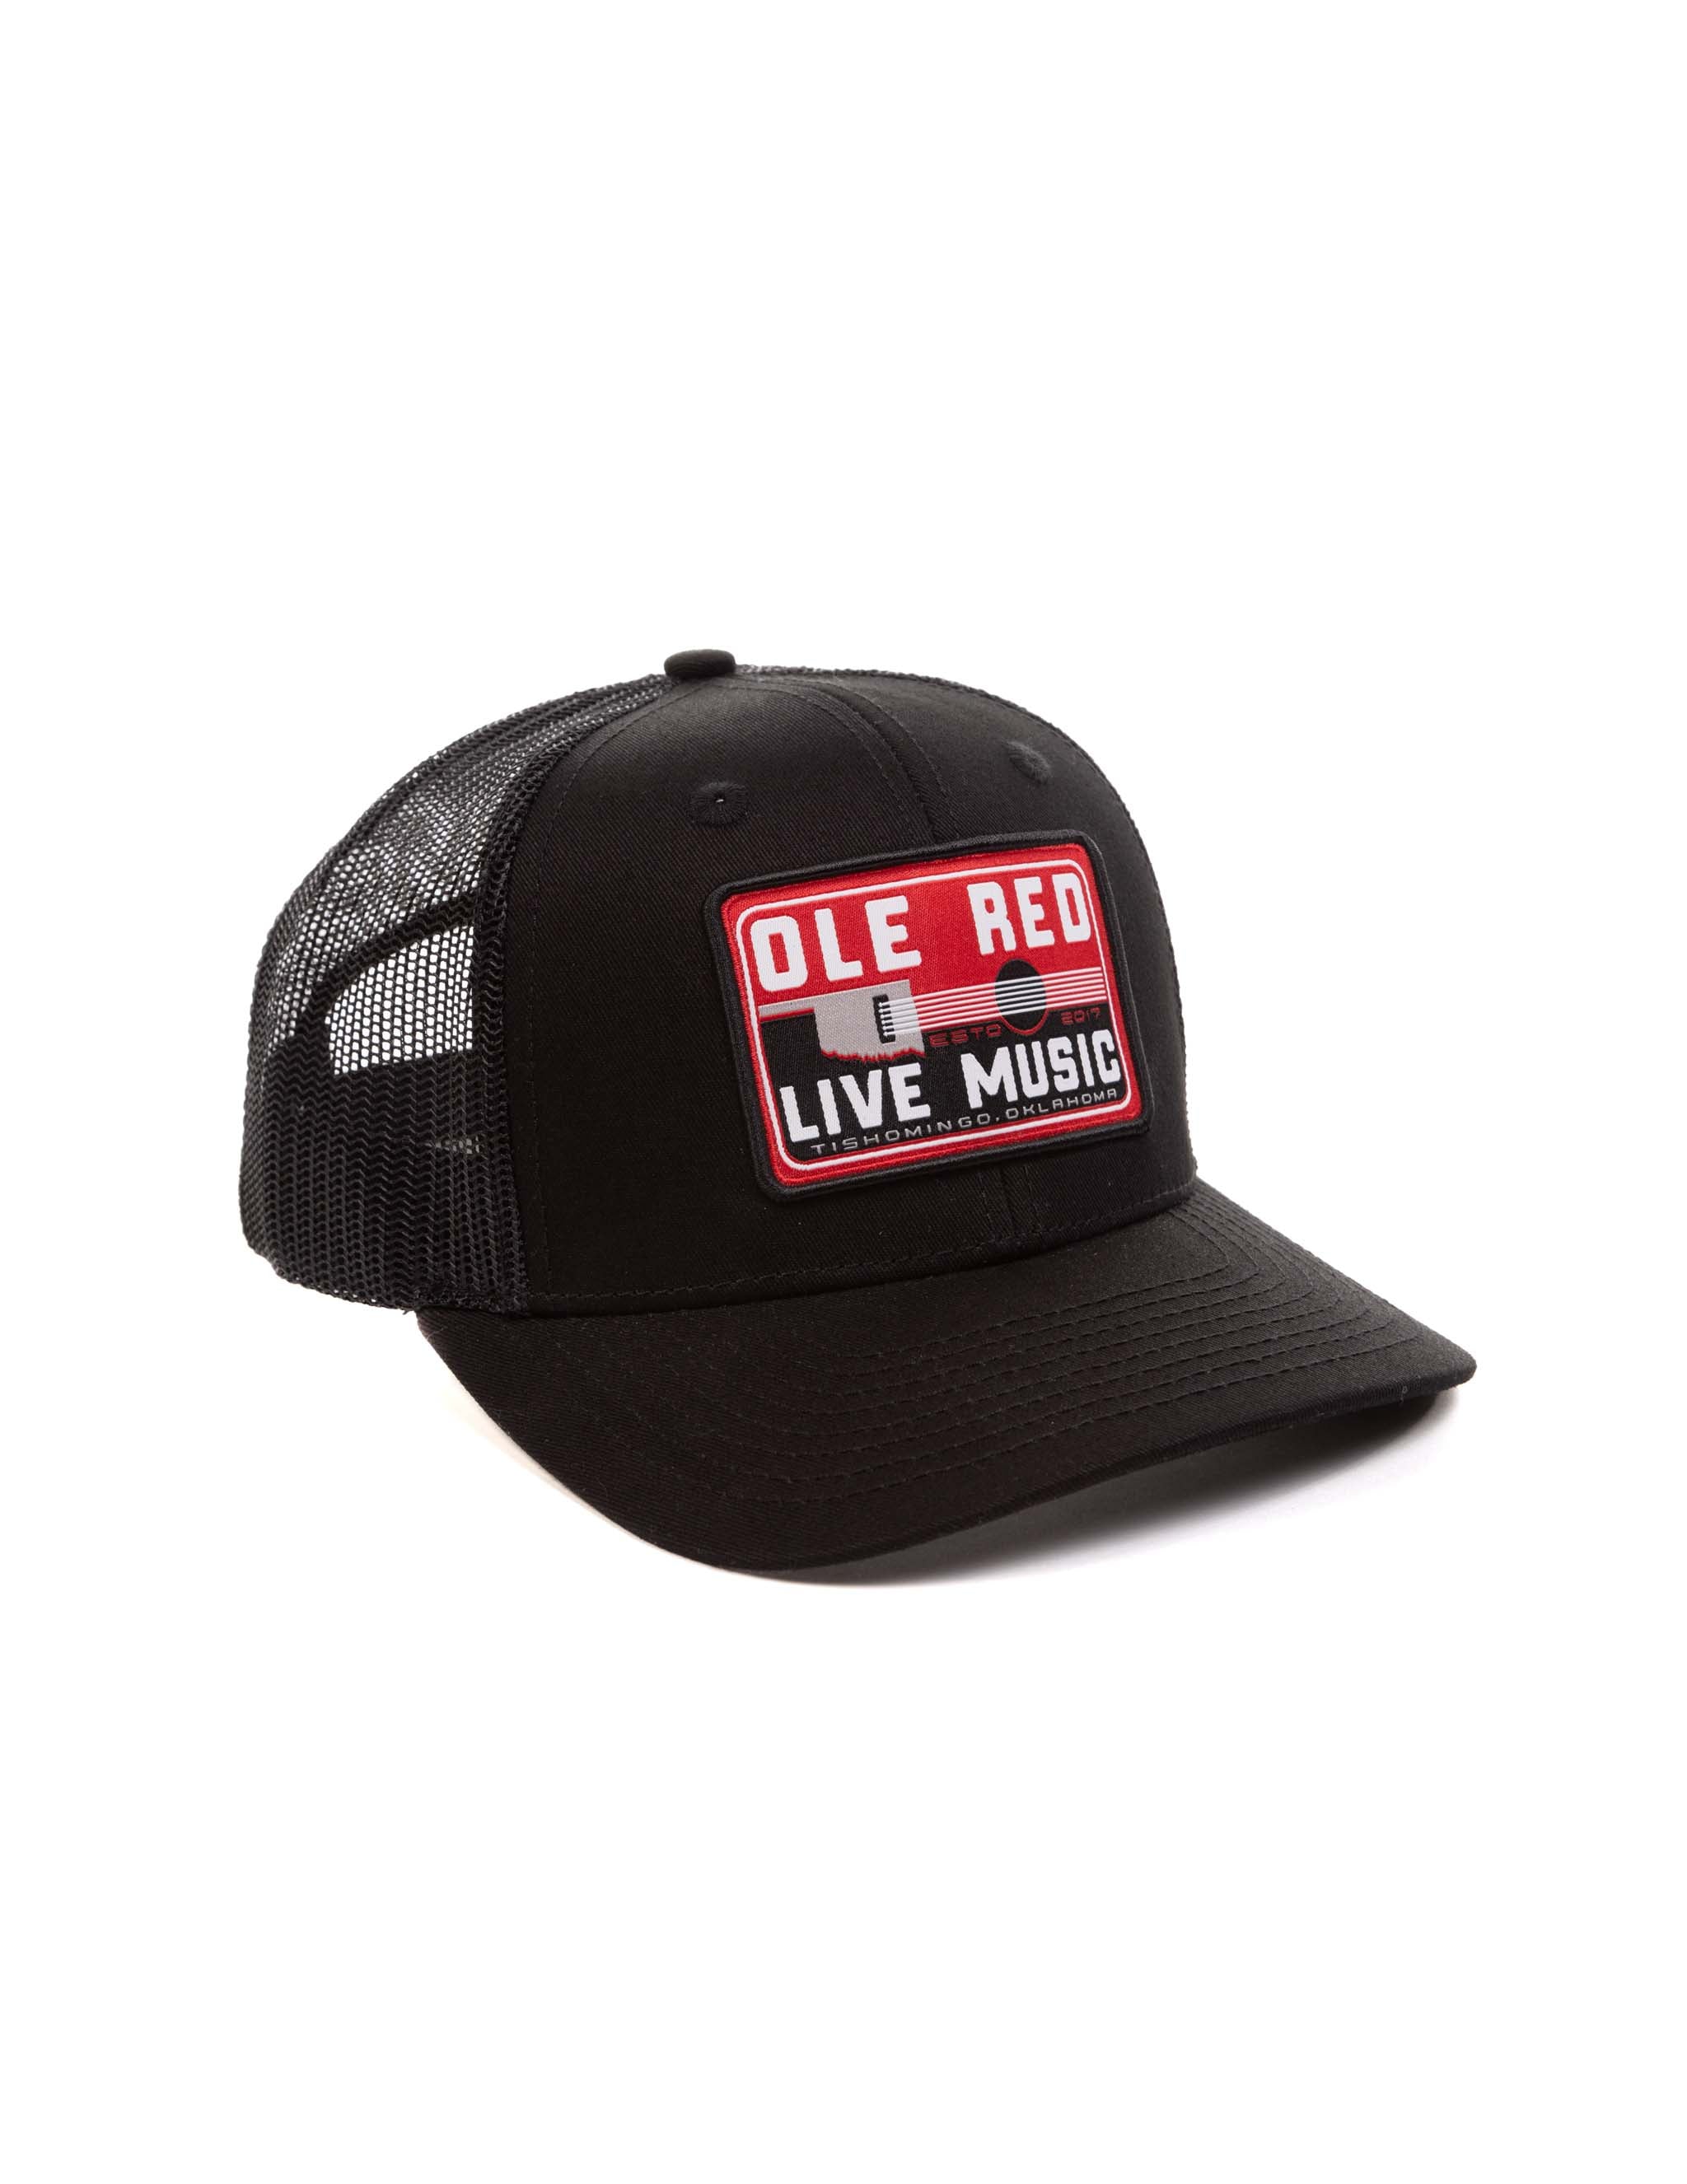 Ole Red Tishomingo State Mesh Hat